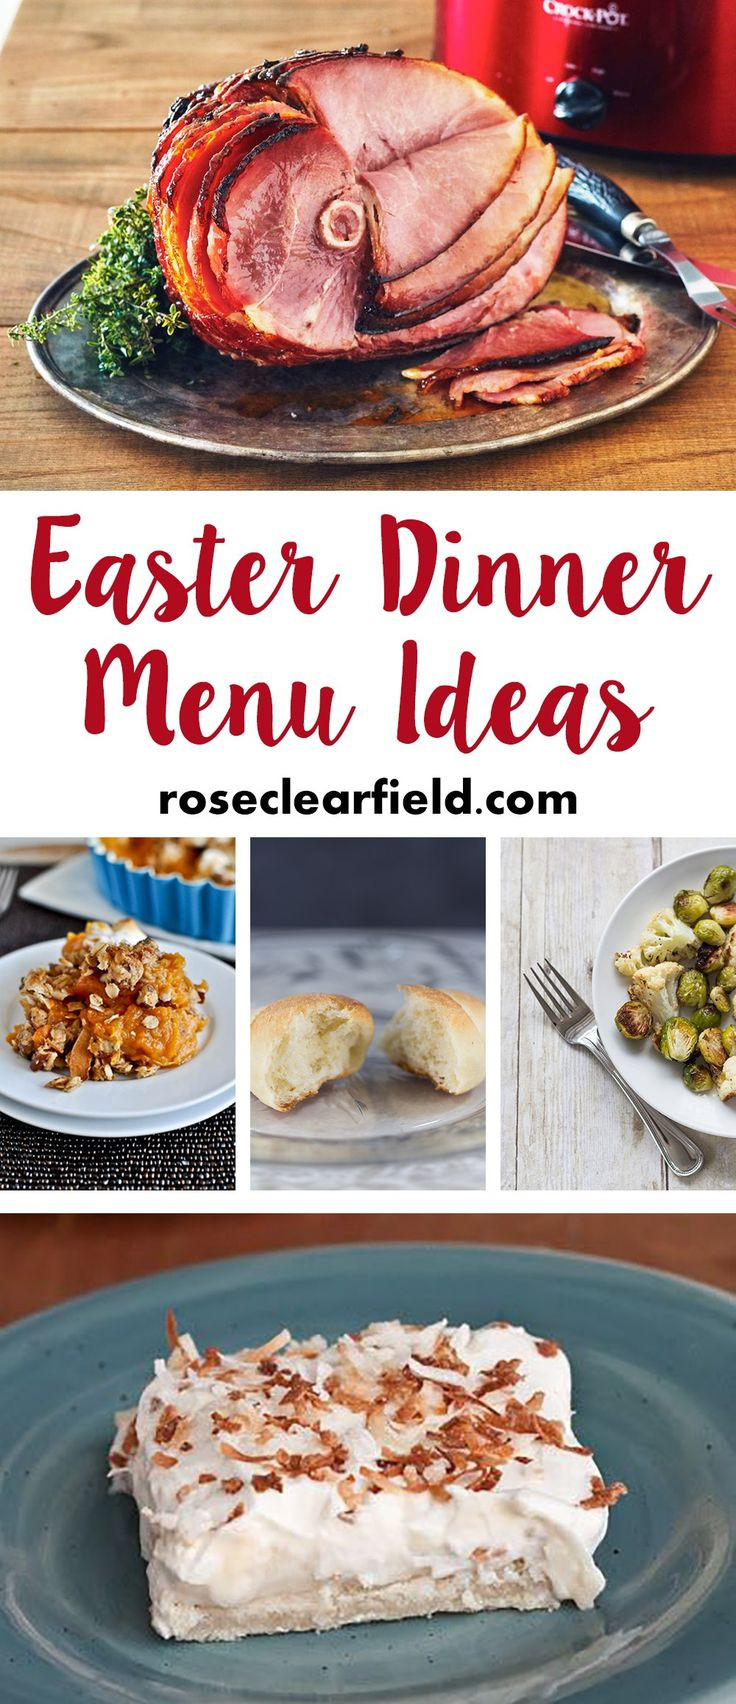 Best Easter Dinner Menu Ideas
 Best 25 Easter dinner menu ideas ideas on Pinterest